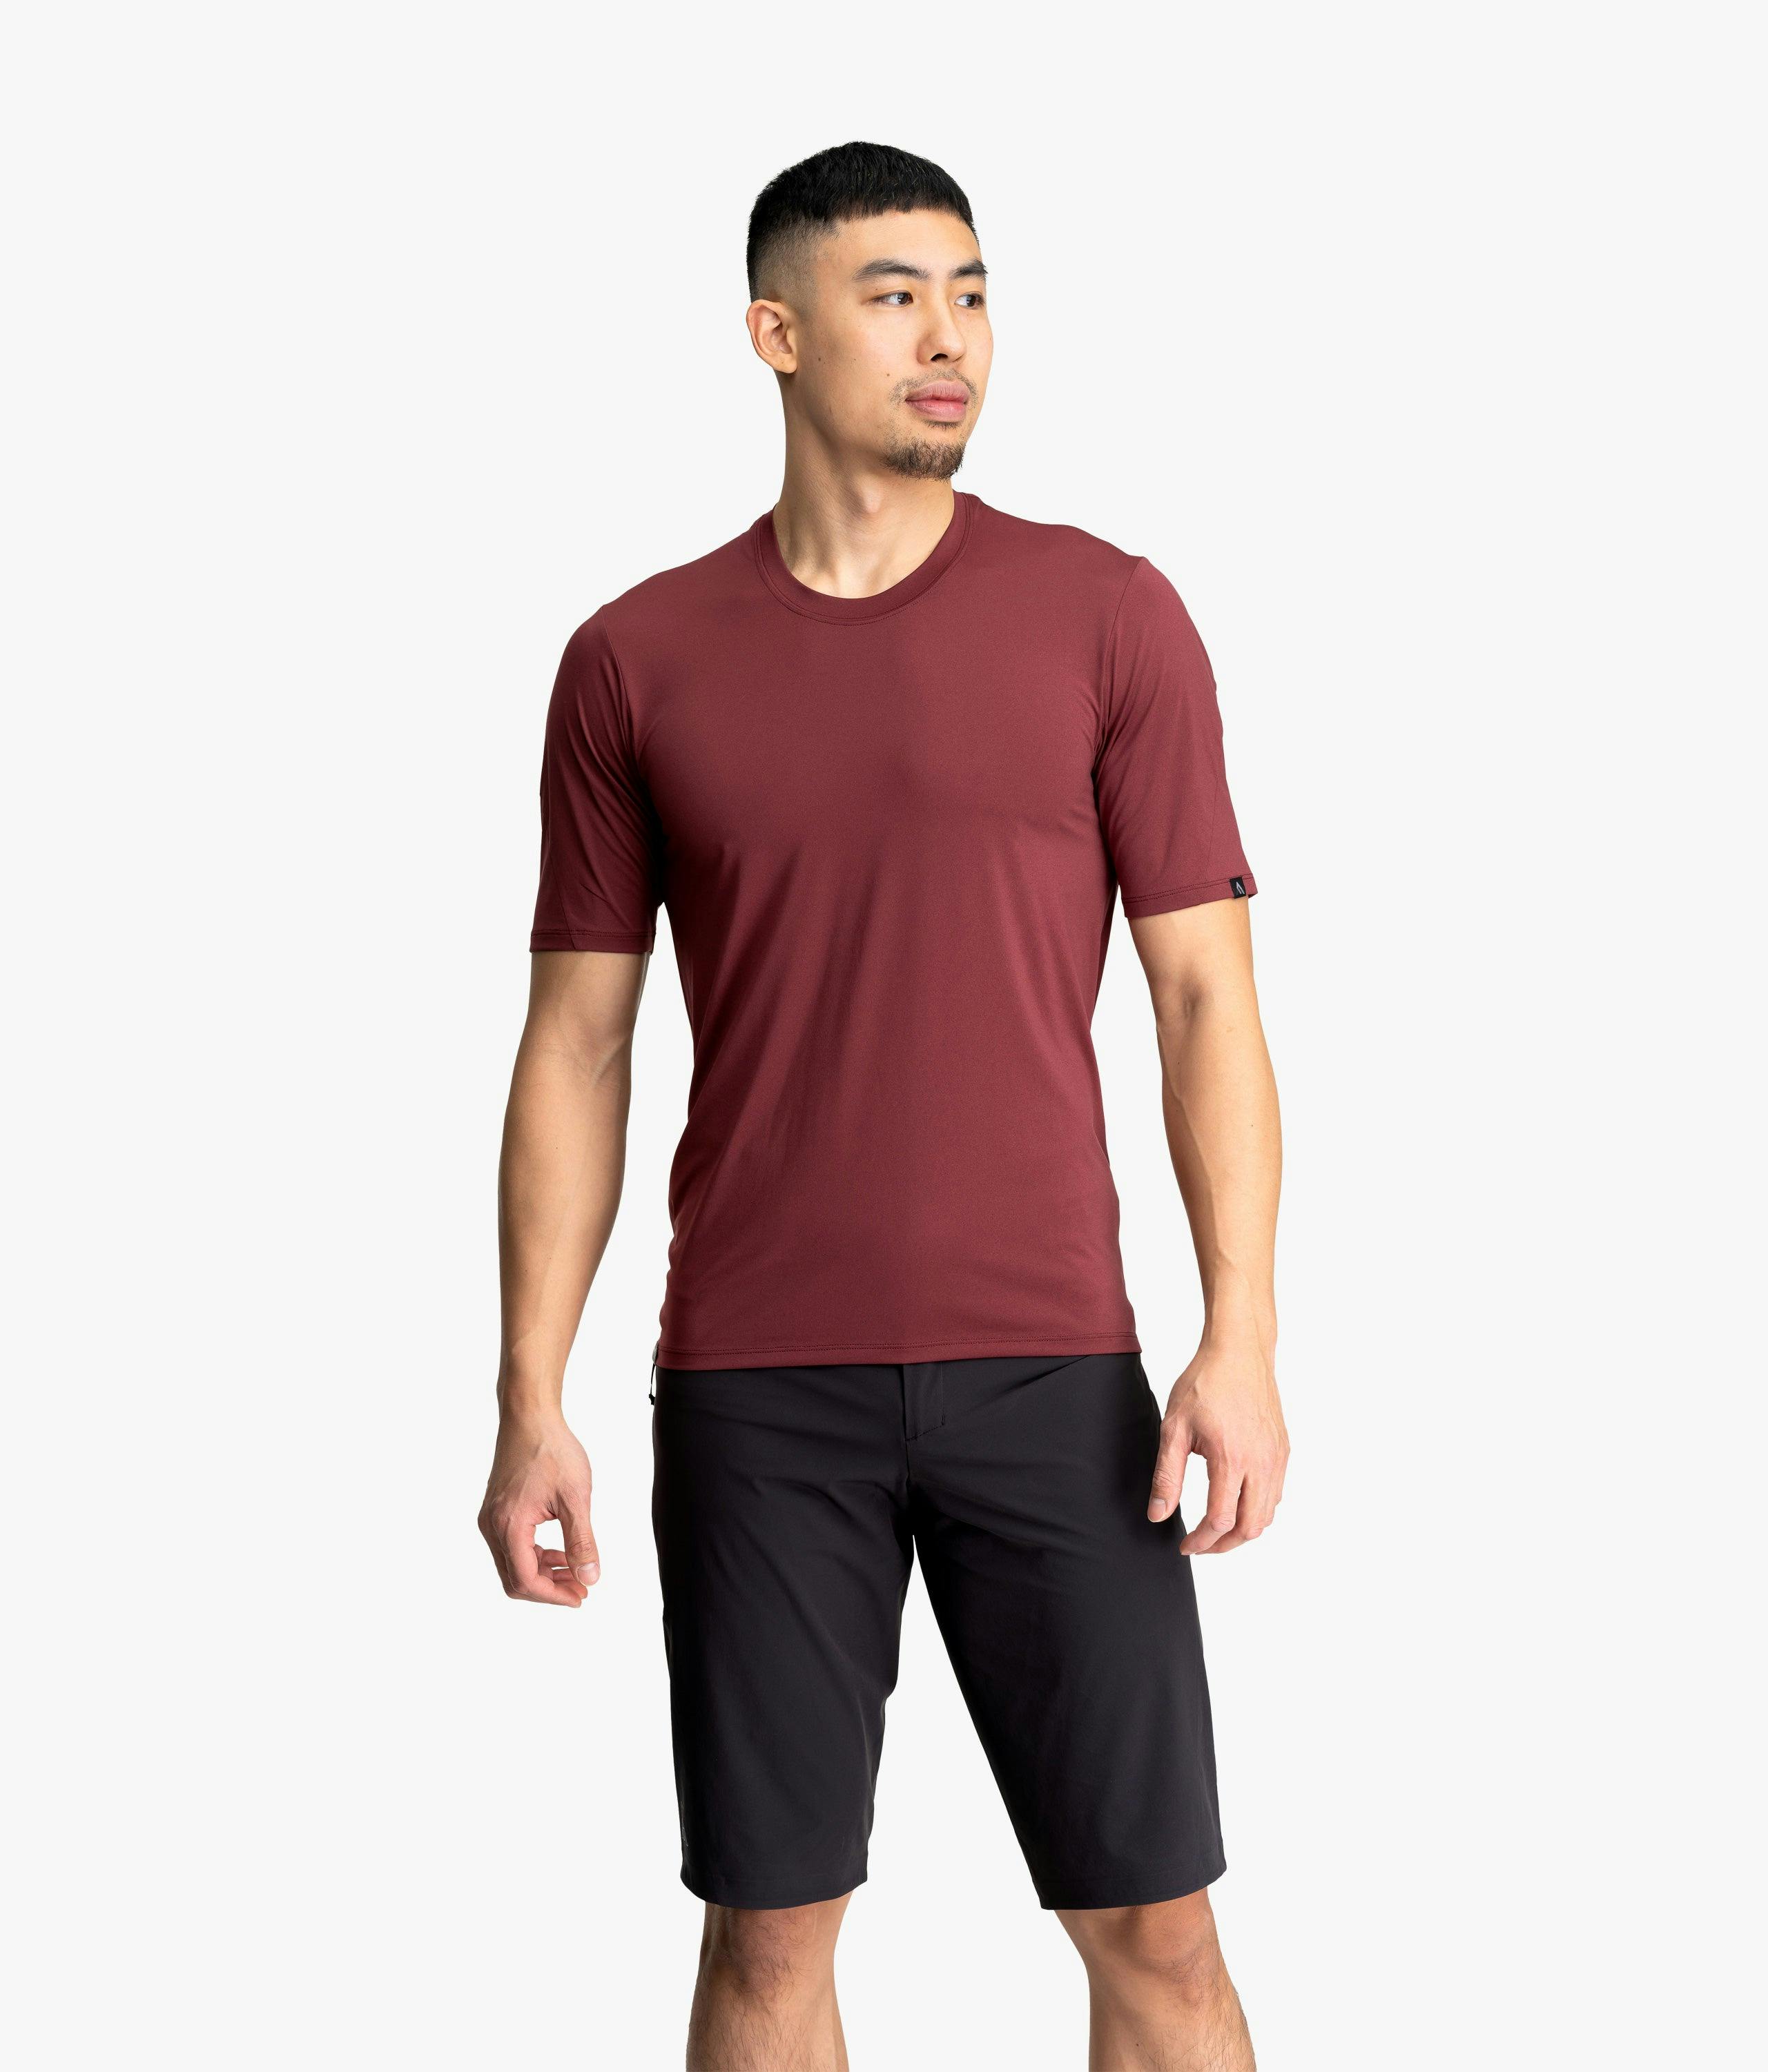 Men's Sight Shirt - Sale